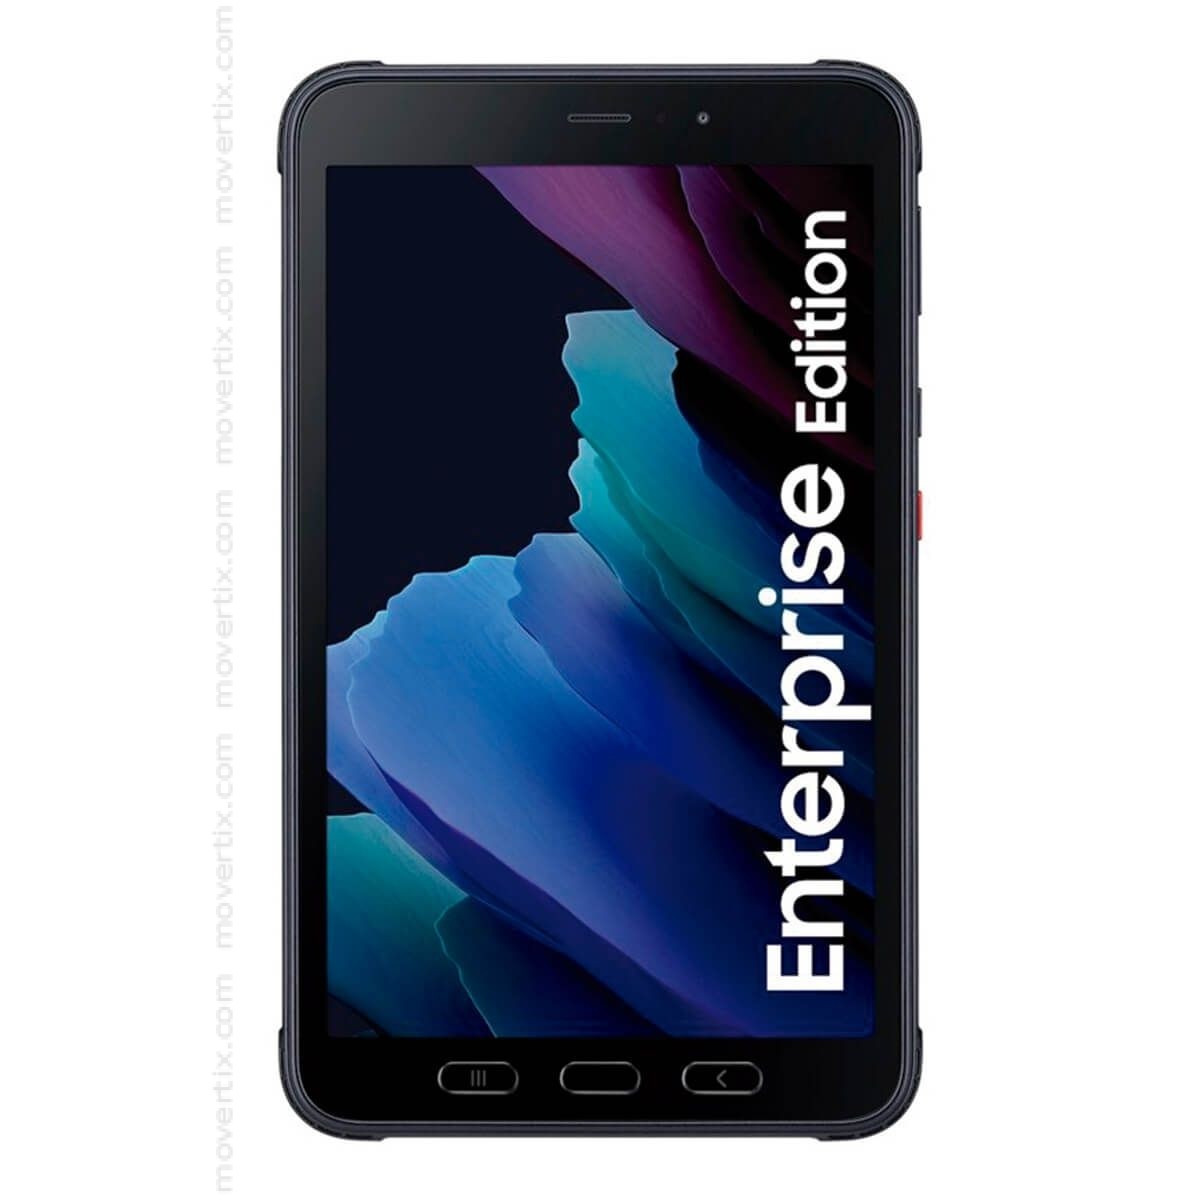 Samsung Galaxy Tab Active EE (8'', LTE) Black SM-T575N (8806090724138)  Movertix Mobile Phones Shop